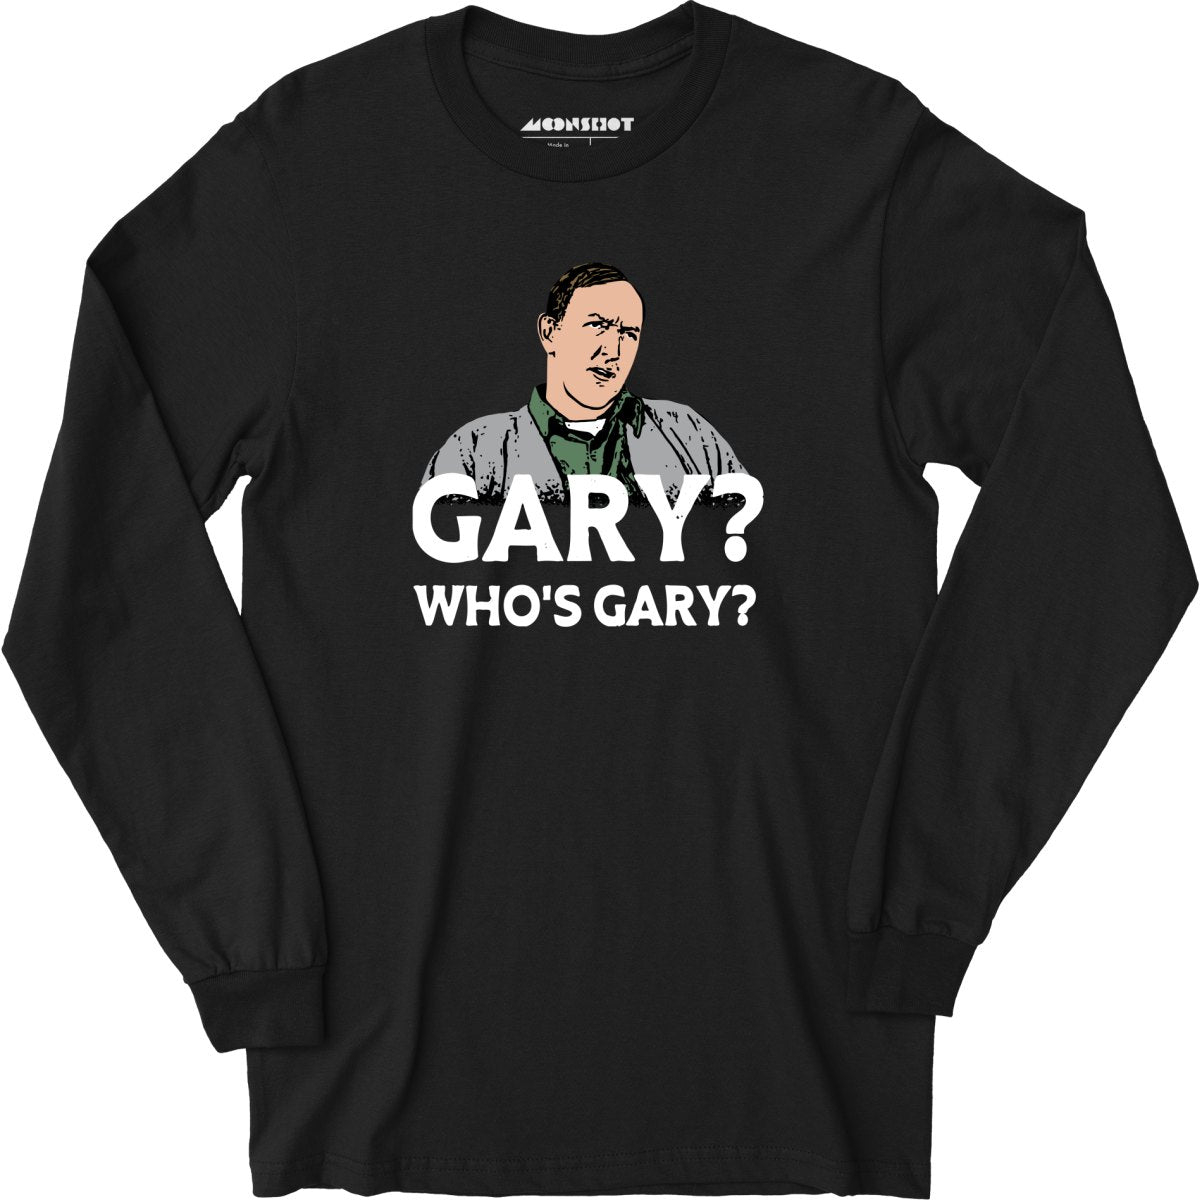 Gary? Who's Gary? - Long Sleeve T-Shirt